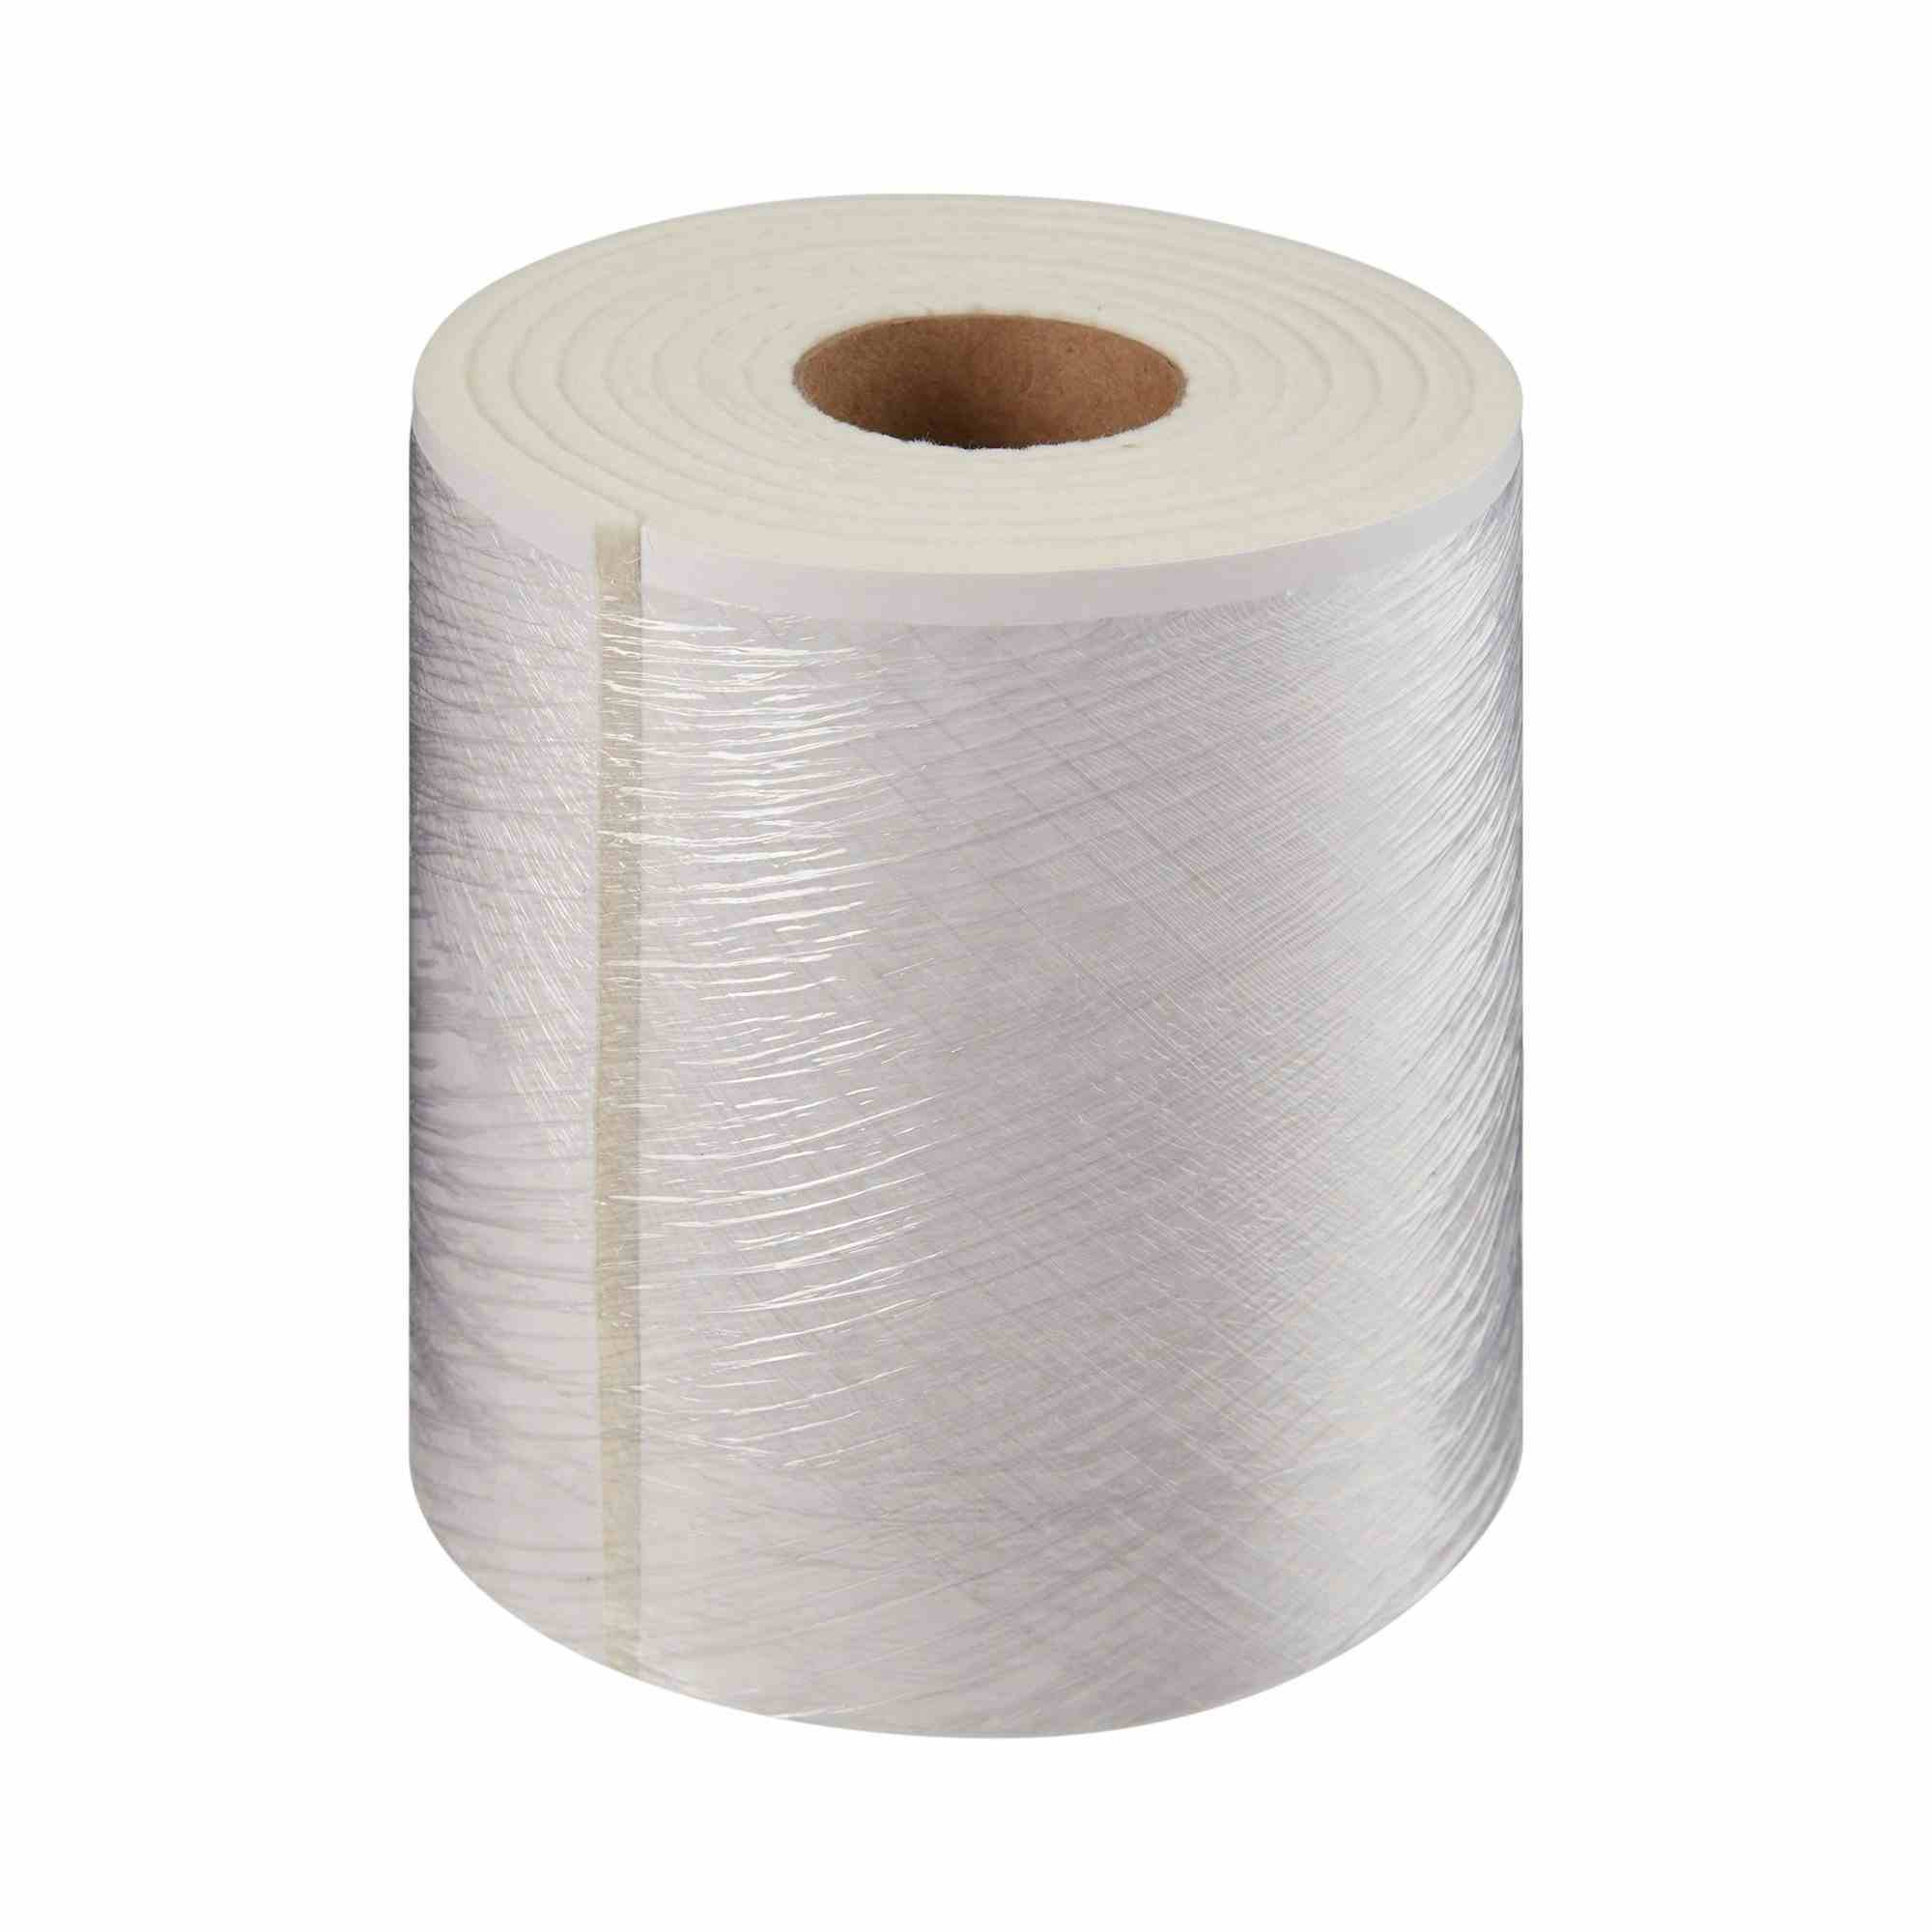 McKesson White Wool/Rayon Adhesive Orthopedic Felt Roll, 6" x 2.5 yd, 9229, 1 Roll